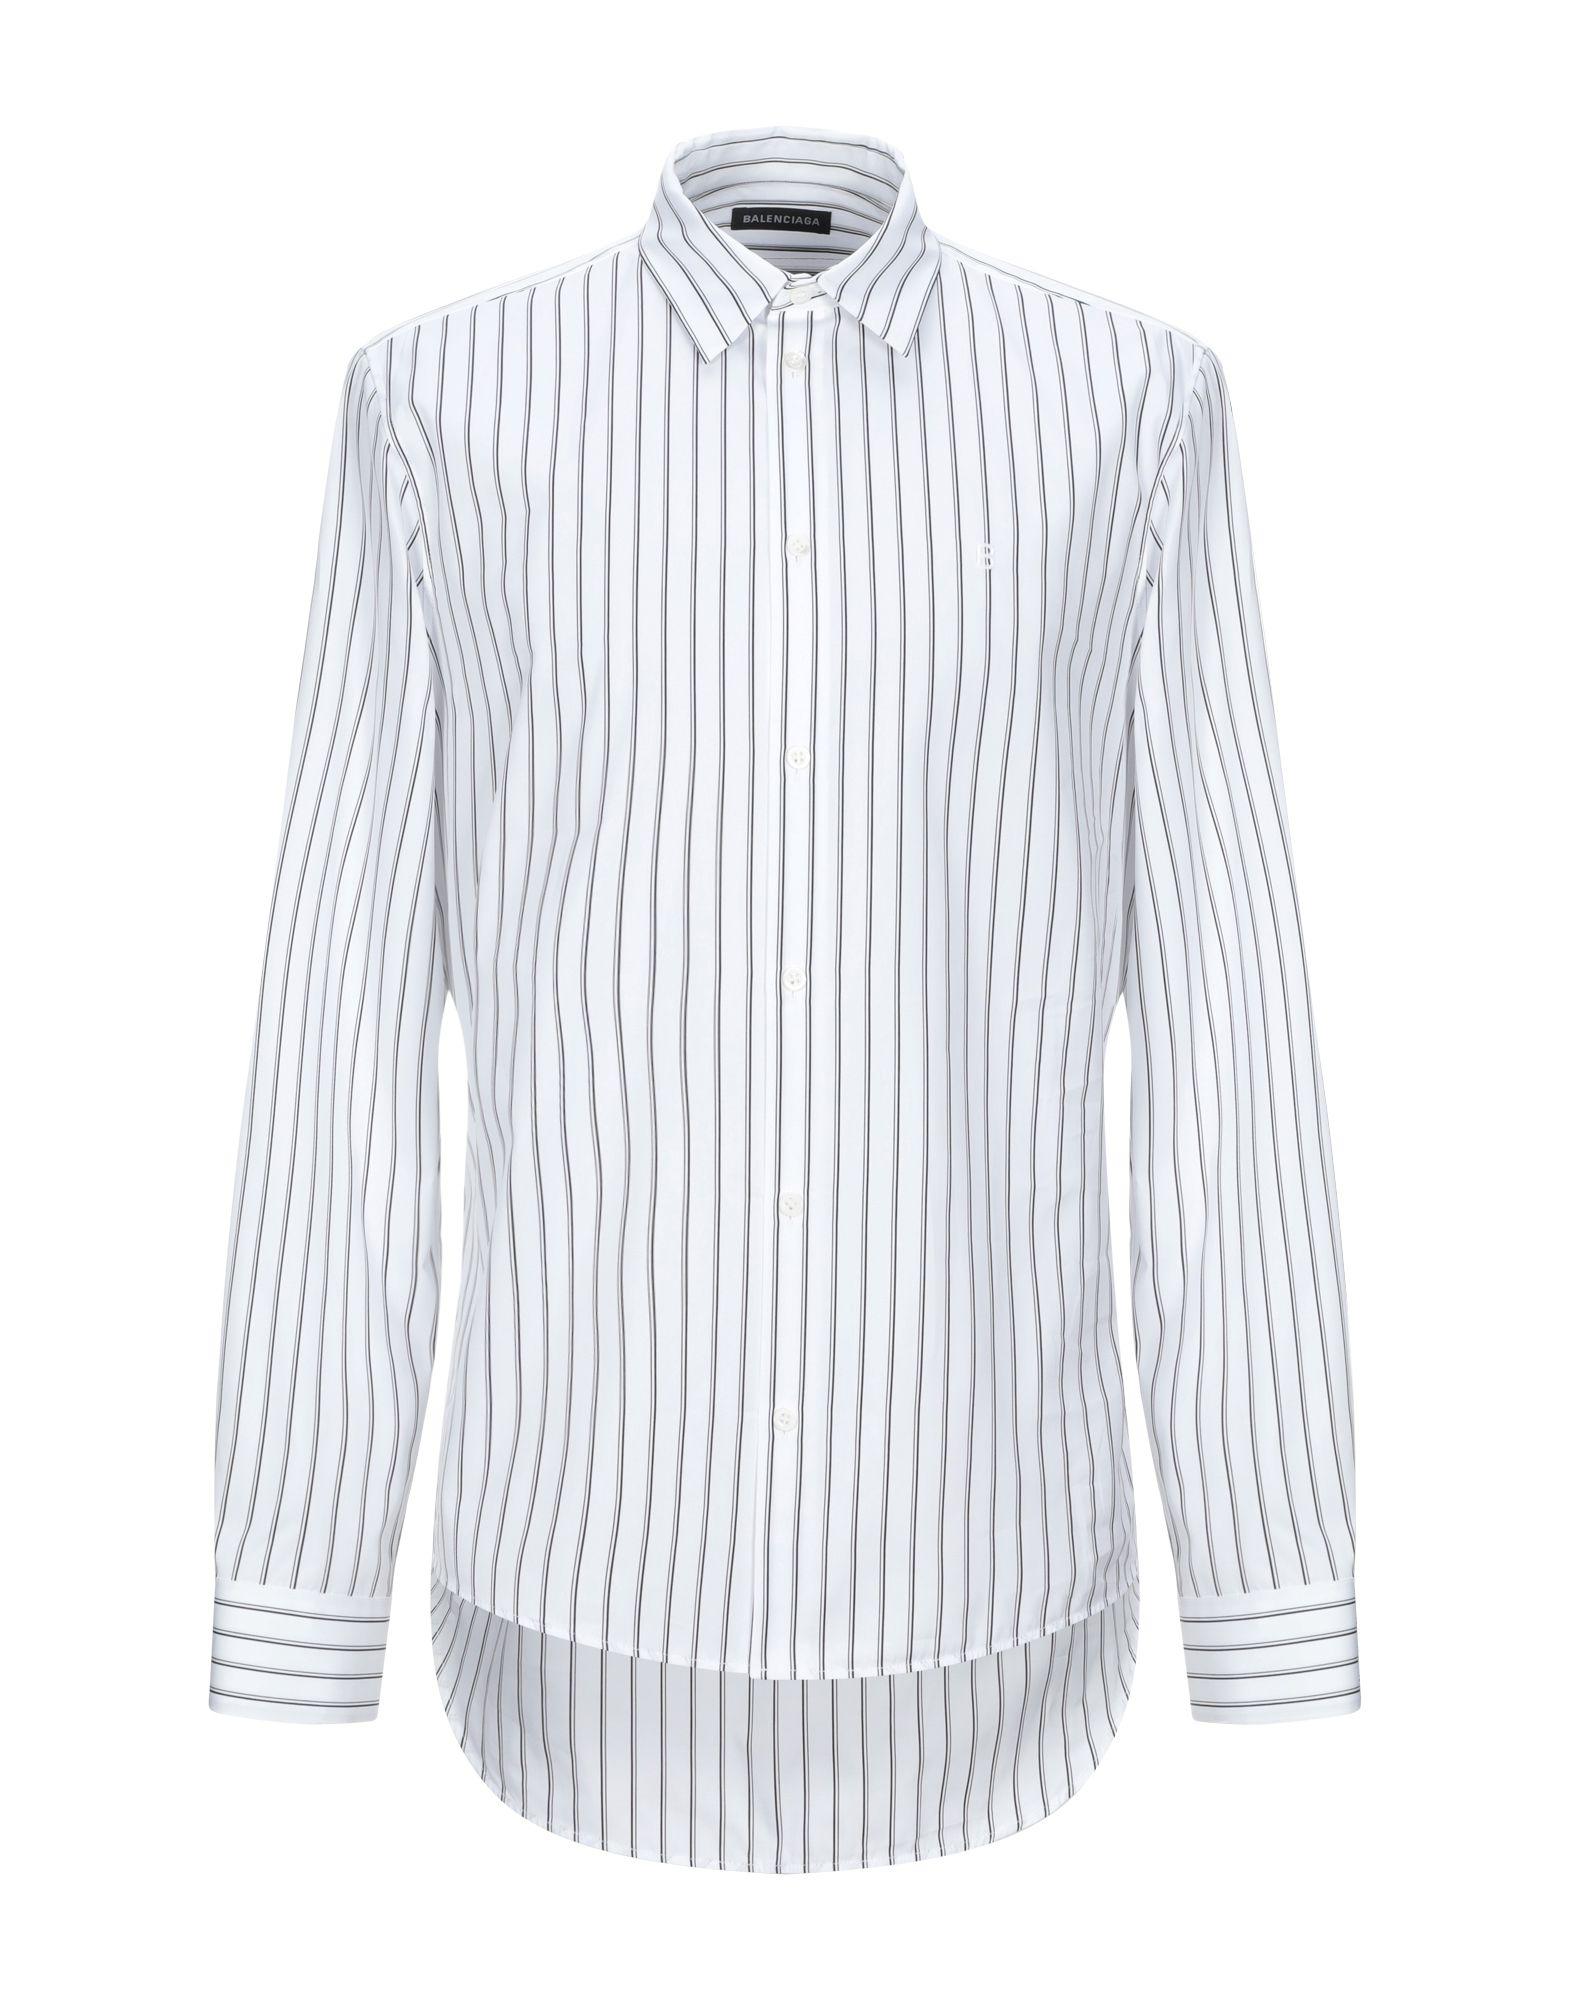 Balenciaga Shirt in White for Men - Lyst